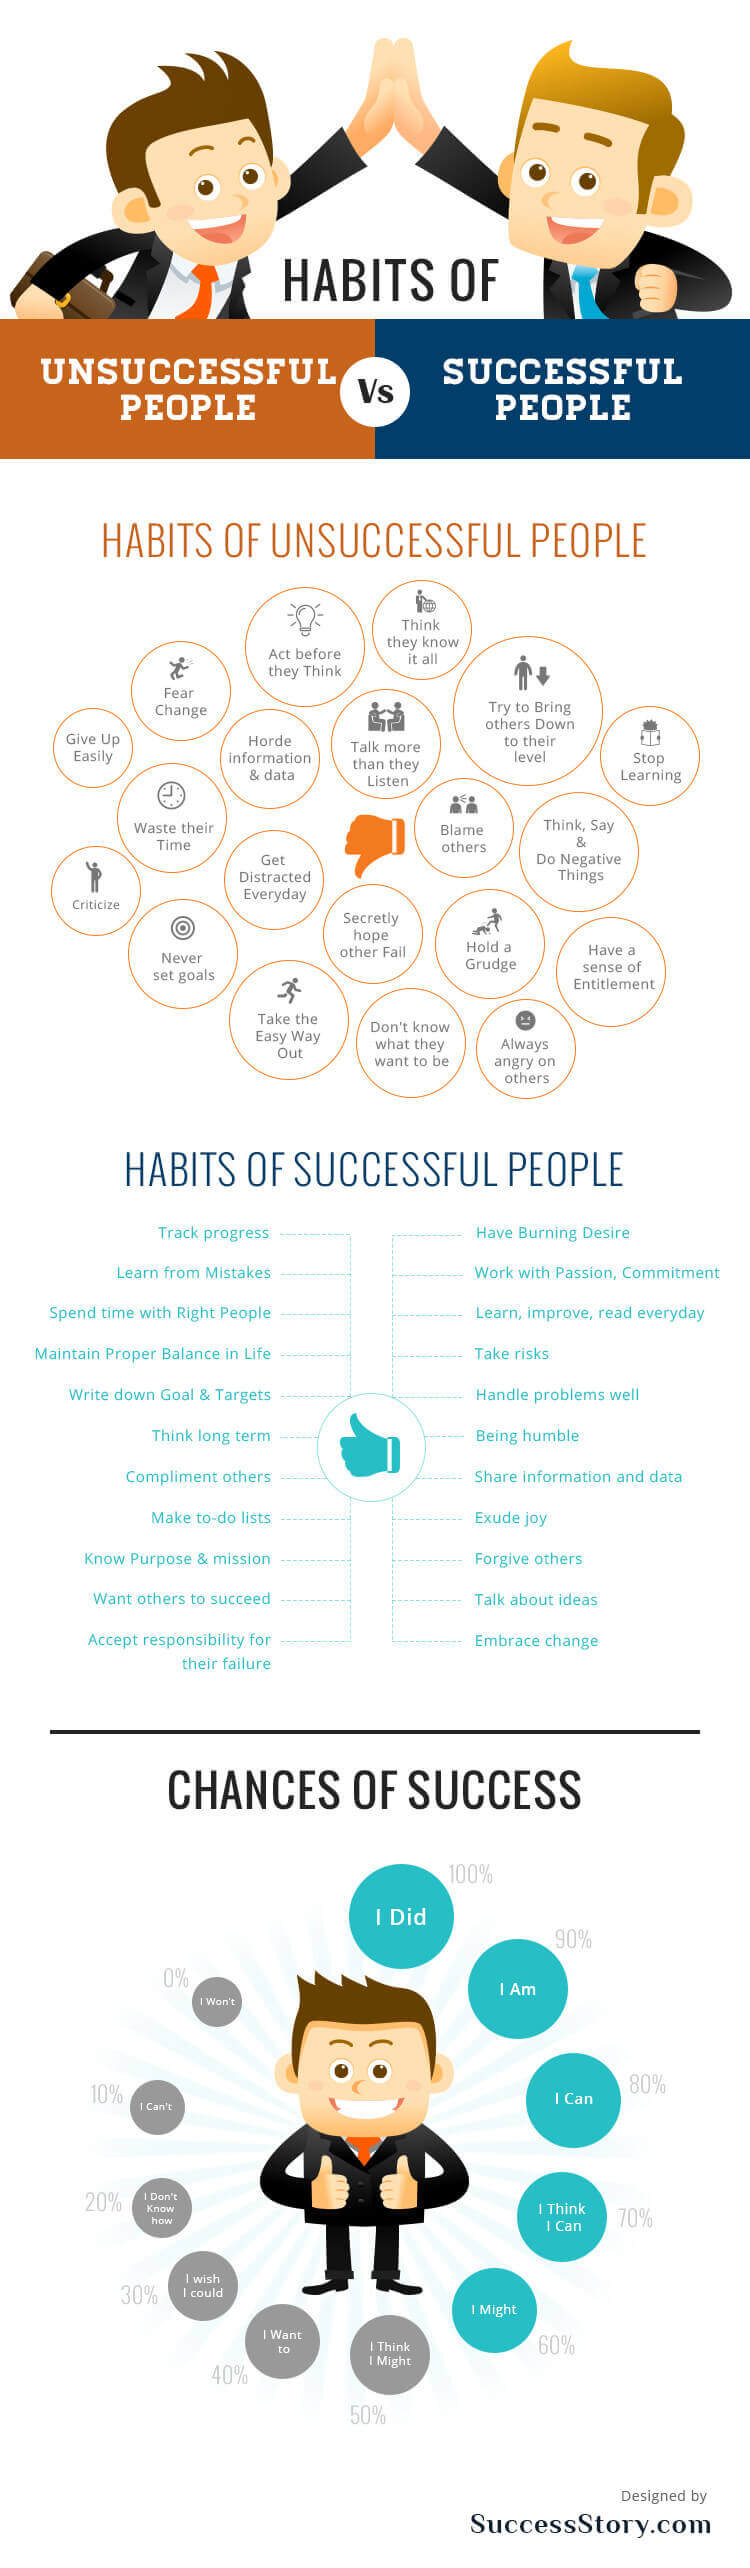 The habits of successful vs unsuccessful people.